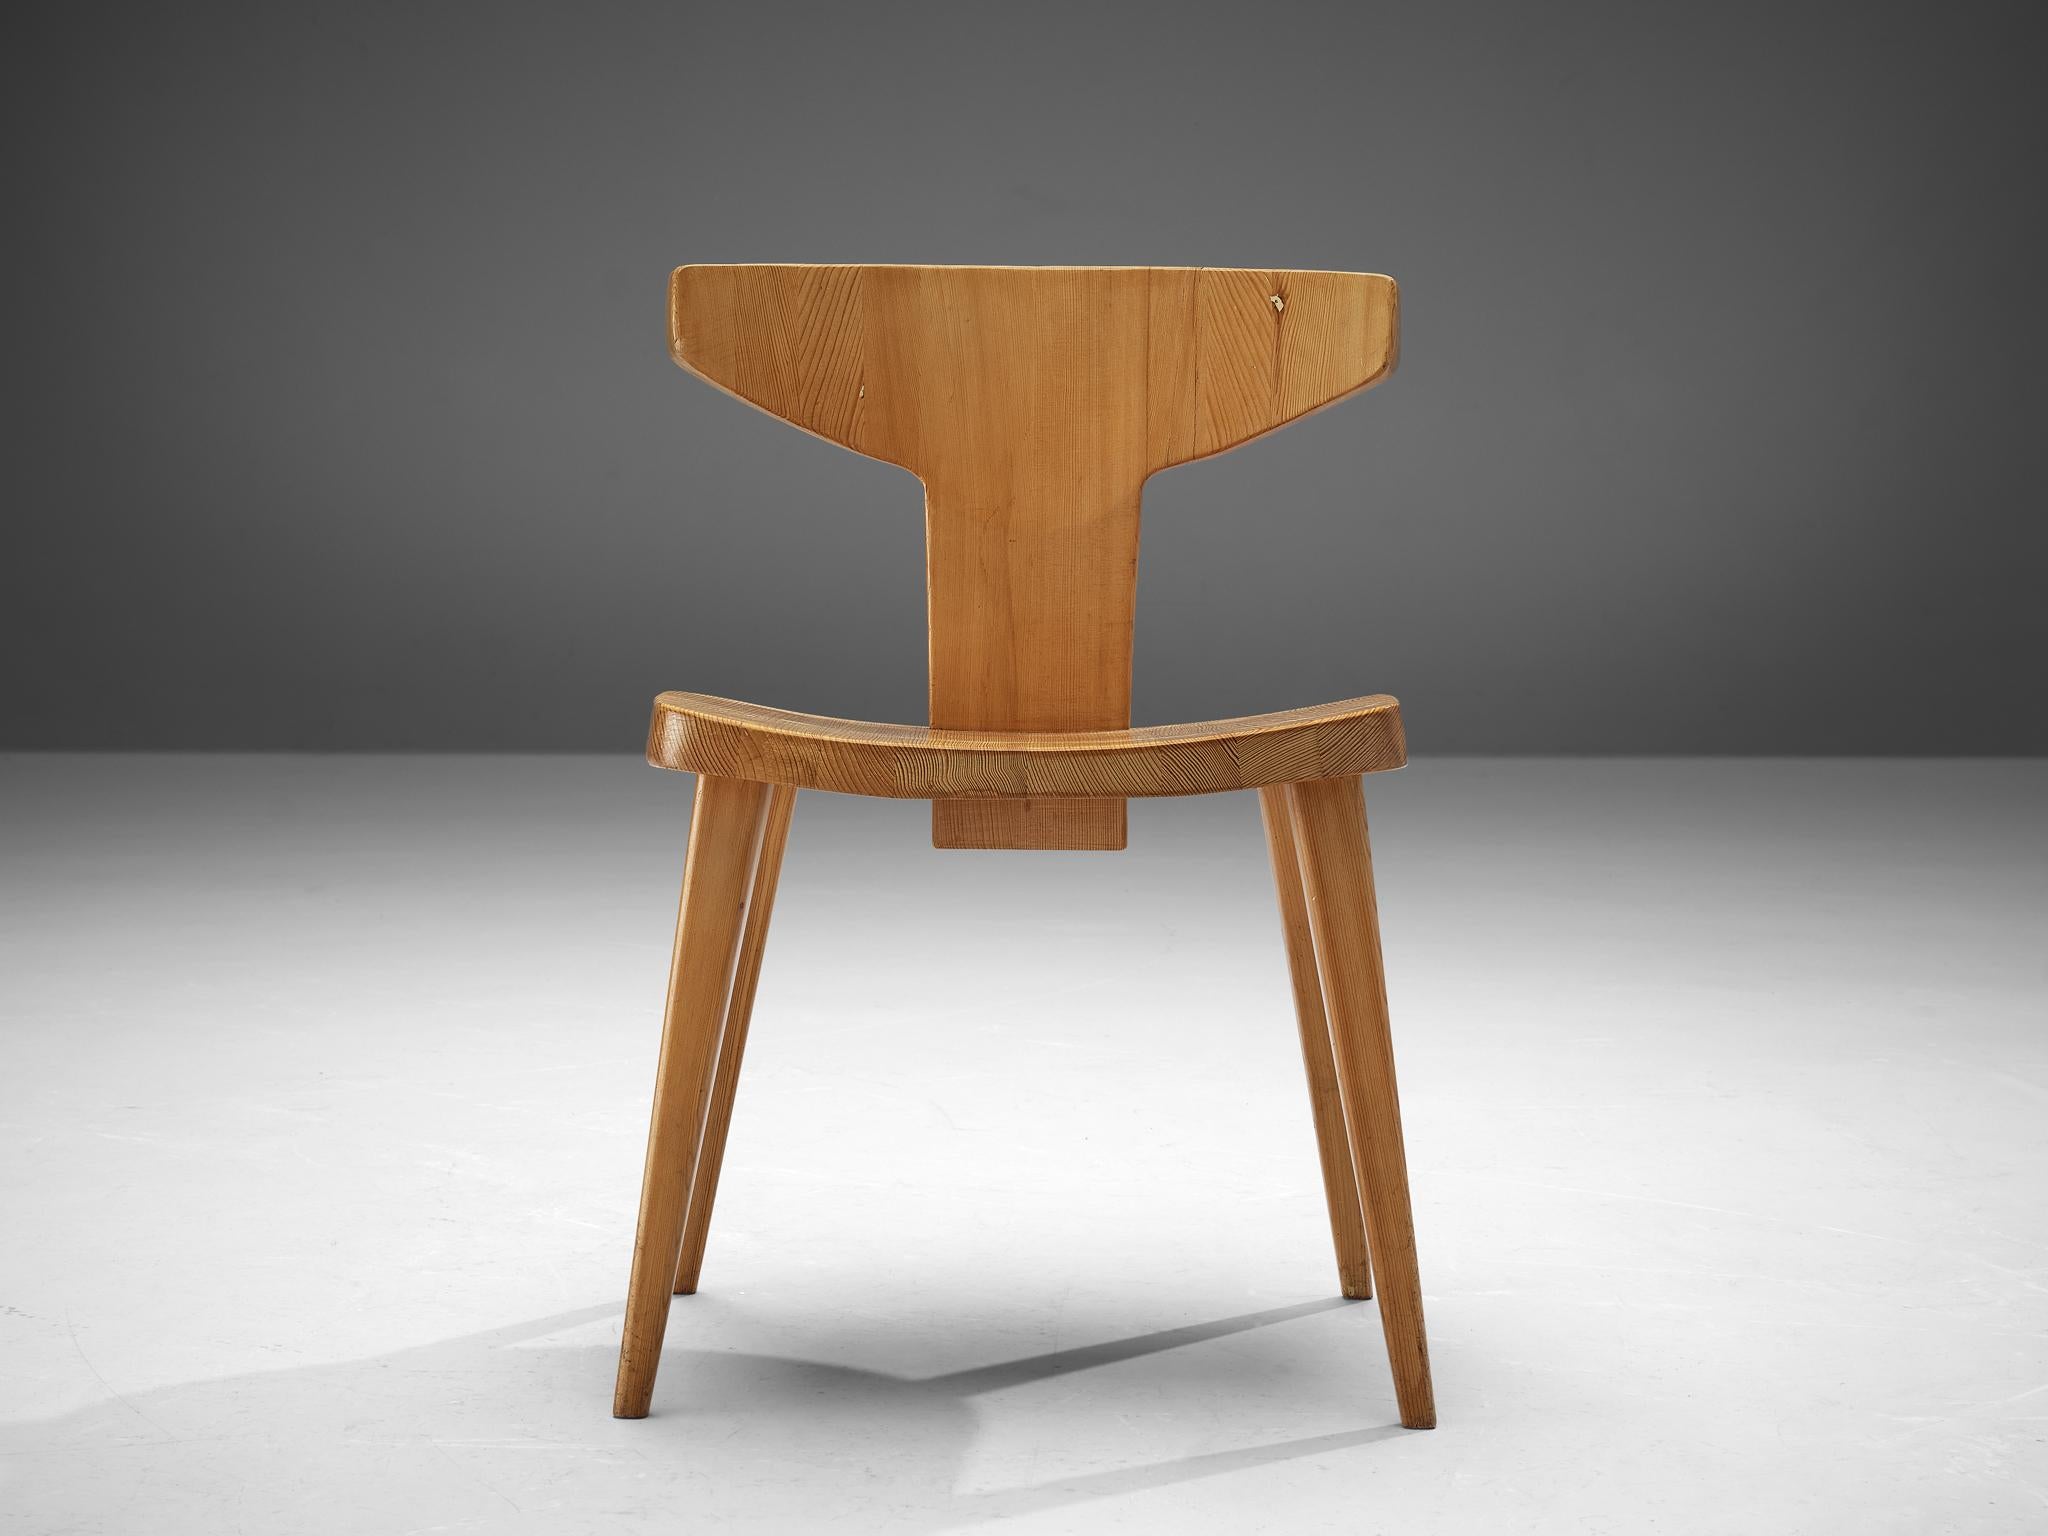 Danish Jacob Kielland-Brandt Sculptural Chair in Solid Pine